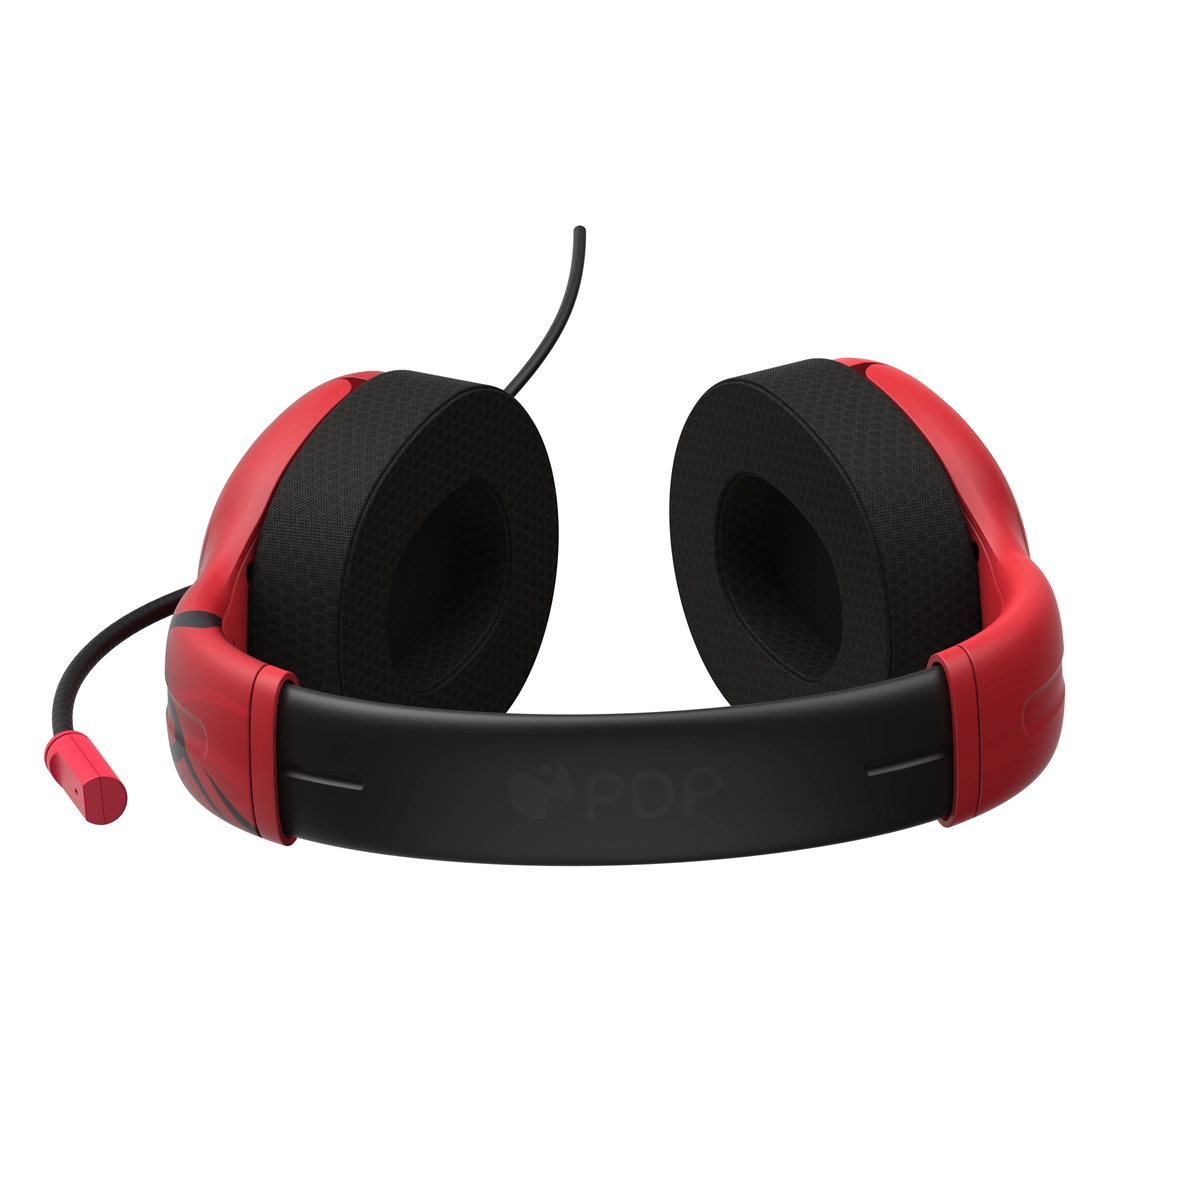 Spirit Red Bundle: Headset & Controller